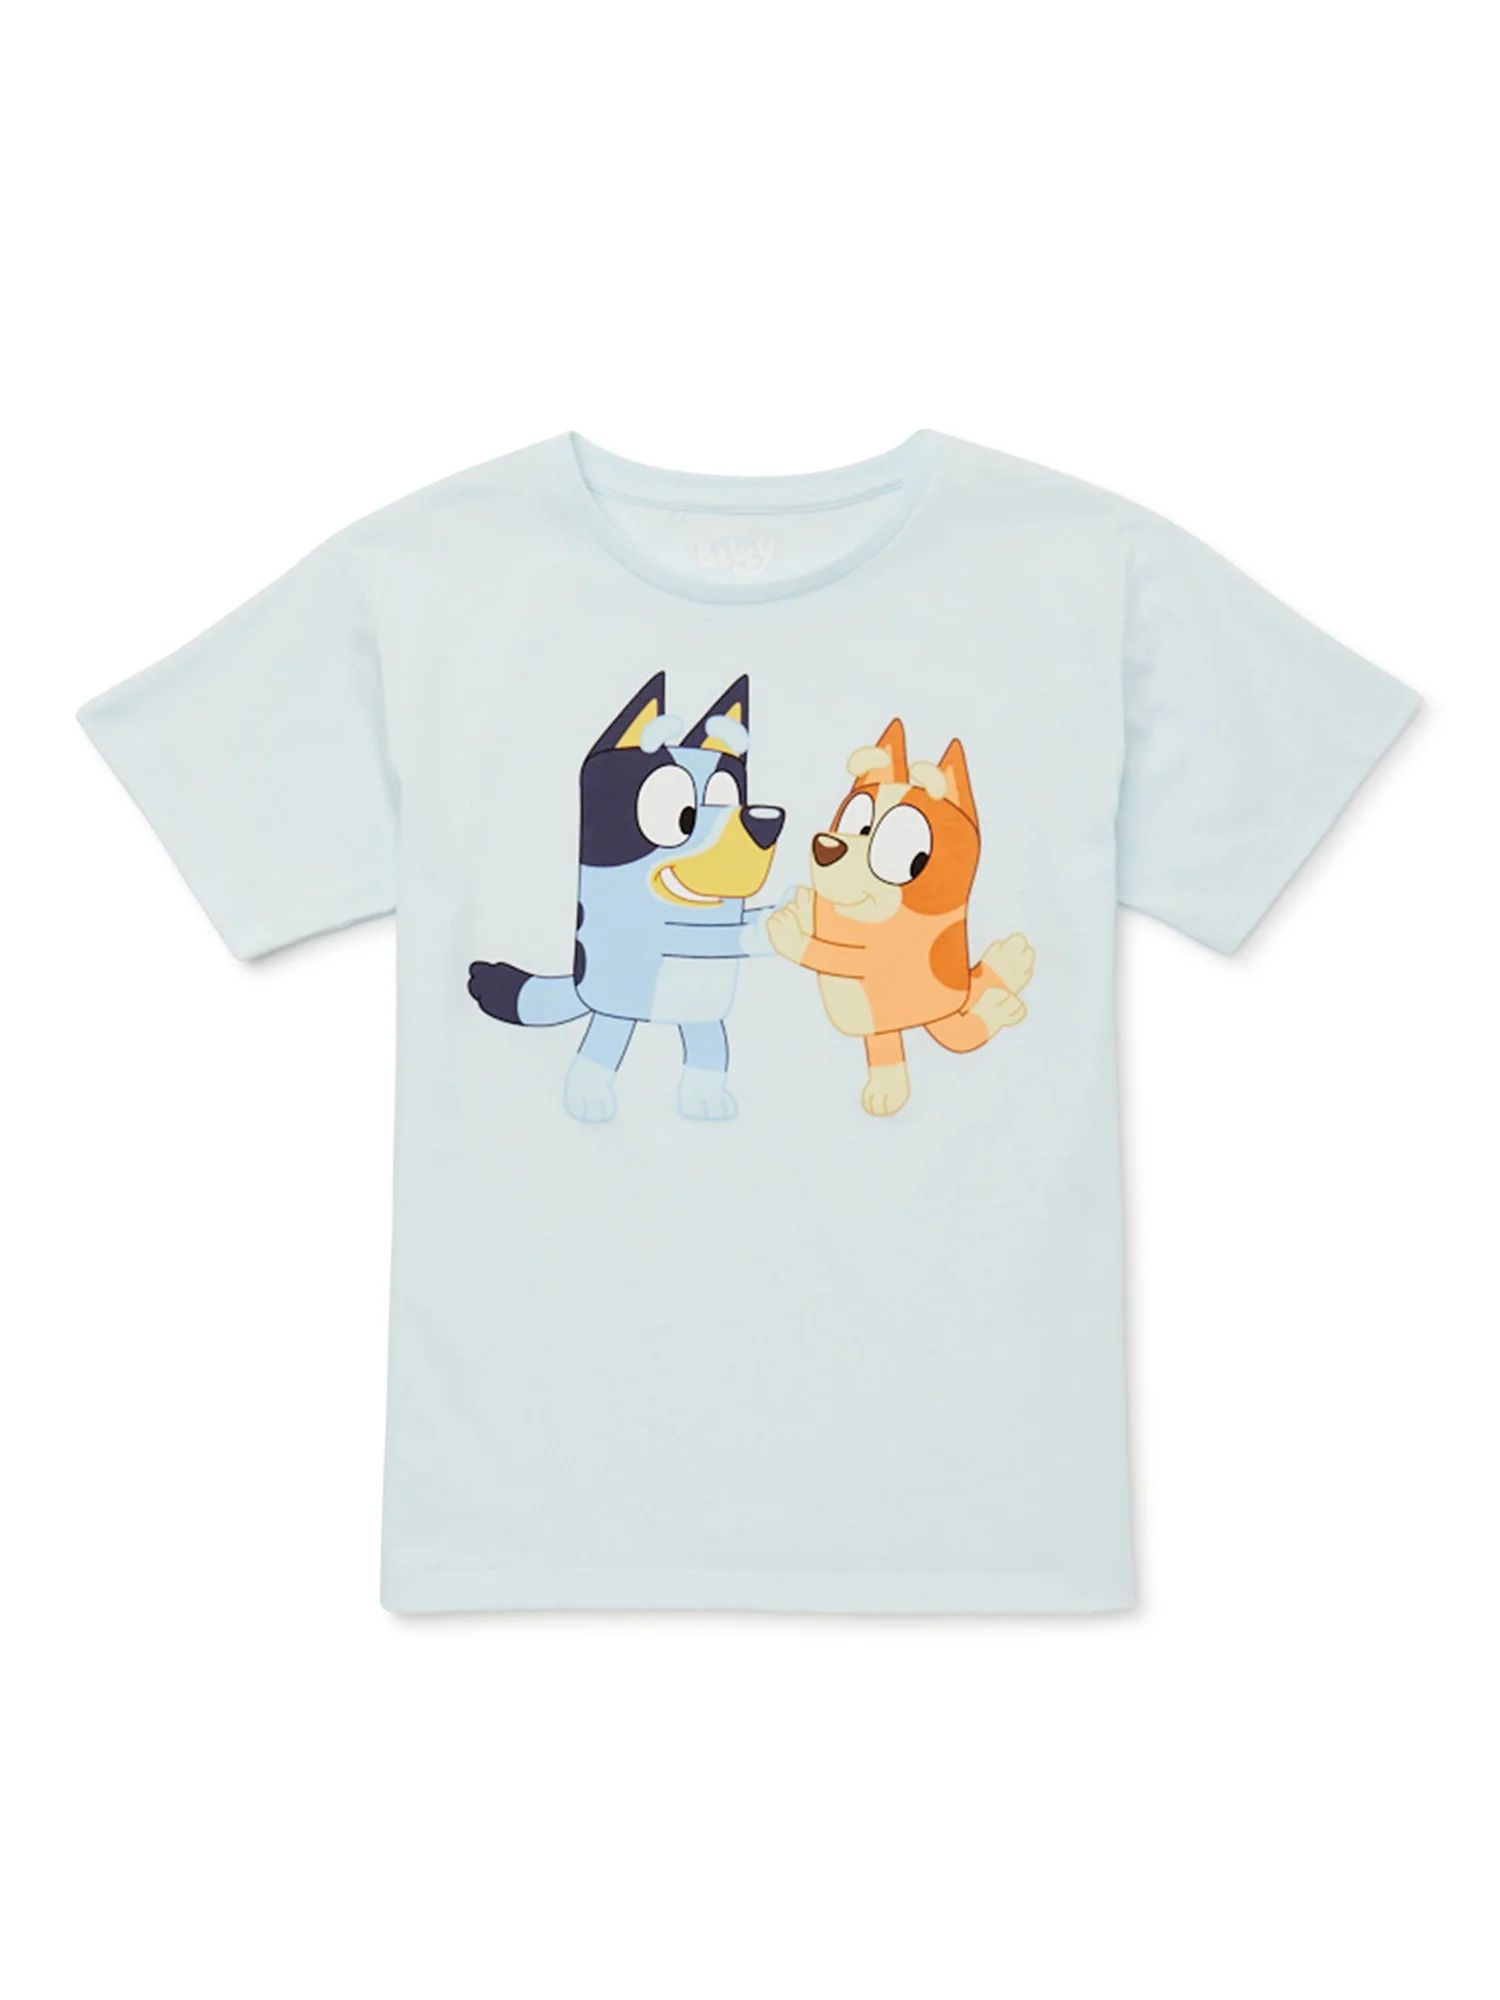 Bluey Girls Bluey and Bingo, Crew Neck, Short Sleeve, Graphic T-Shirt, Sizes 4-16 | Walmart (US)